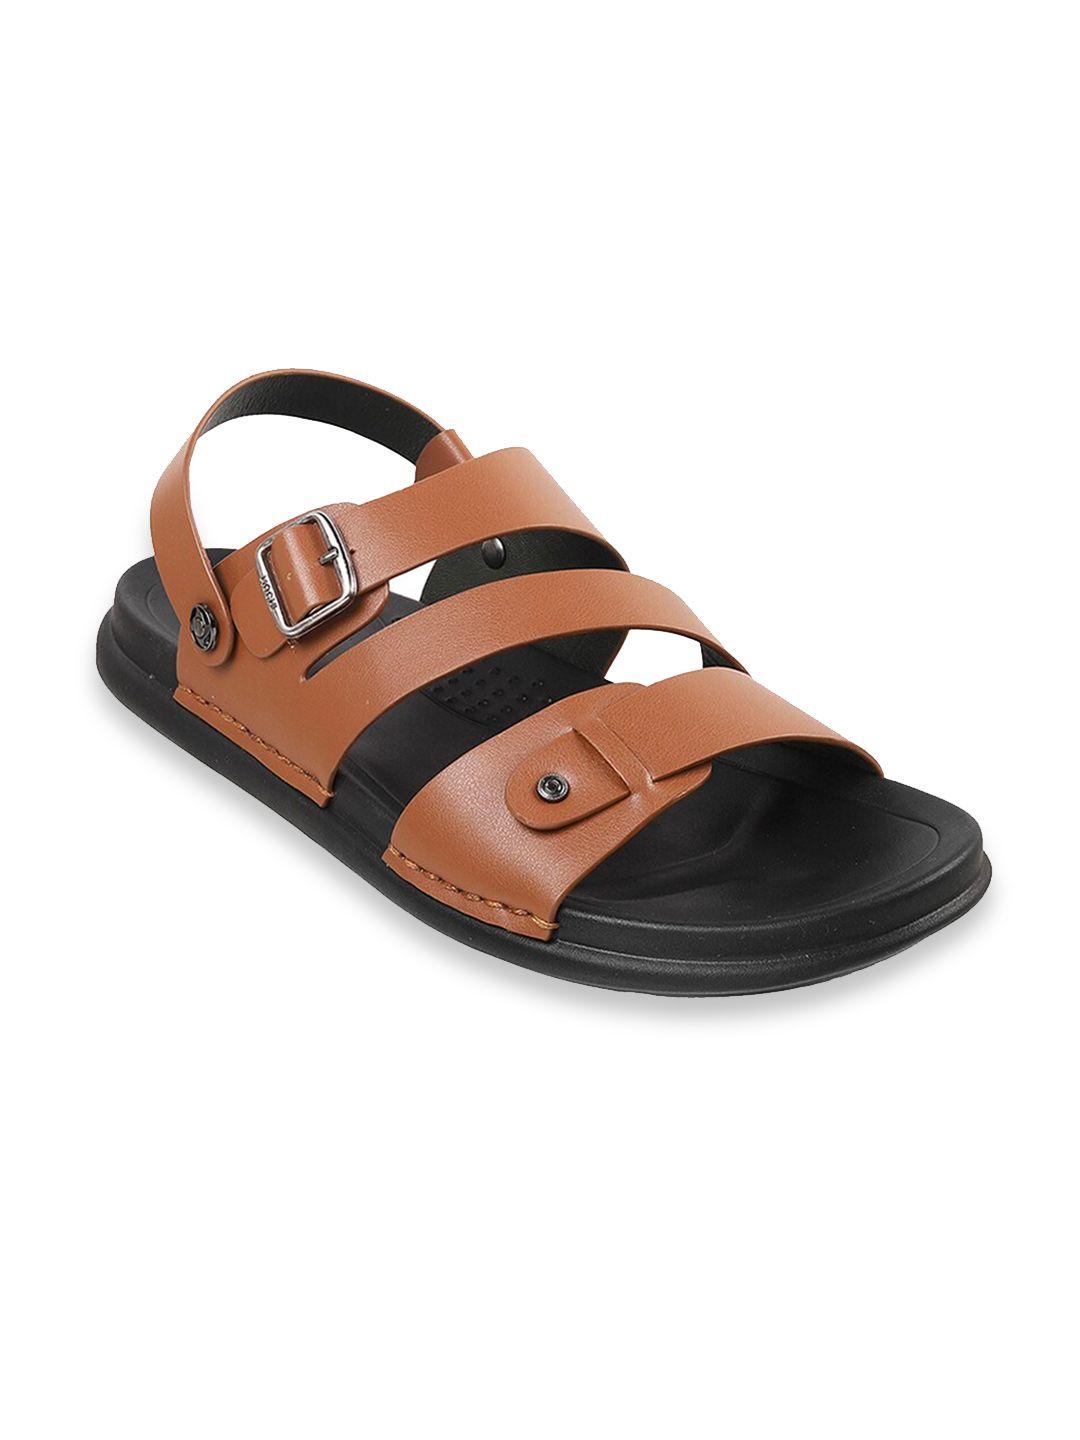 mochi men open toe comfort sandals with backstrap